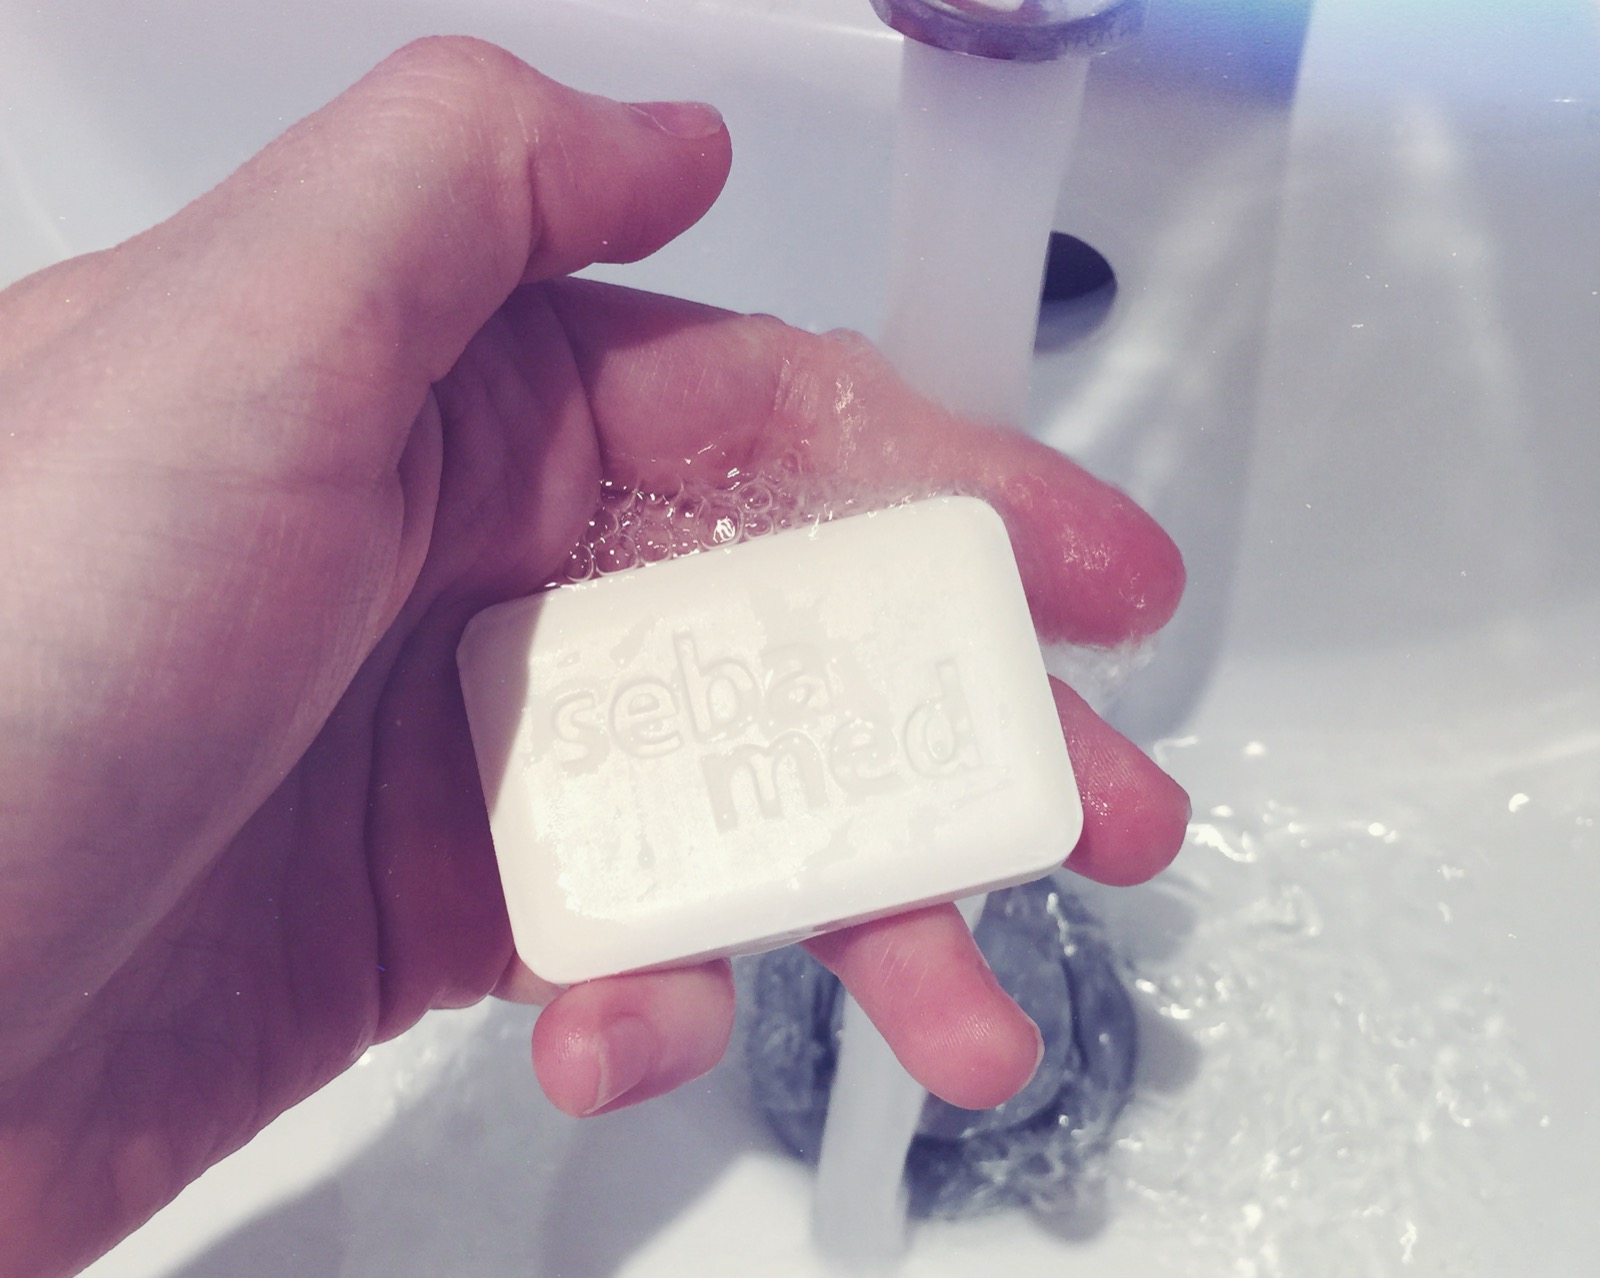 Sebamed Clear Face Soap